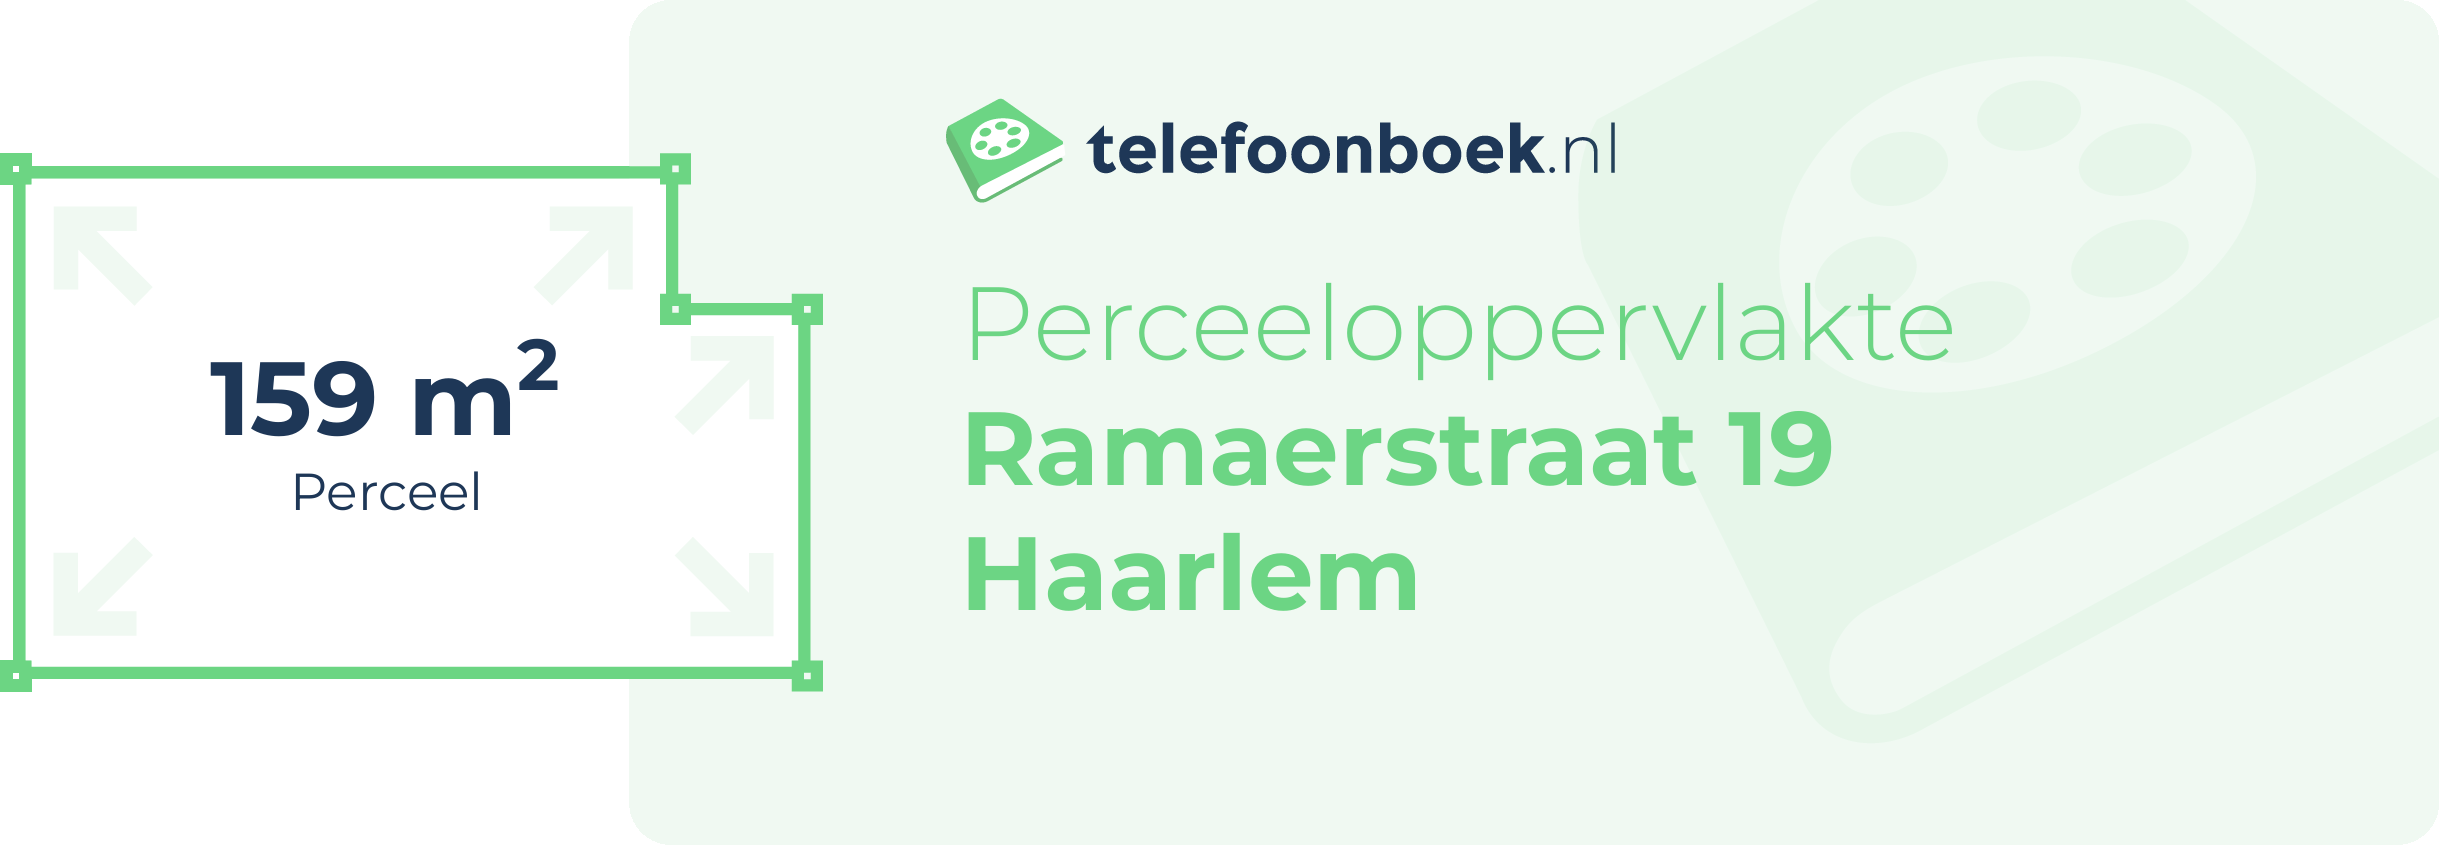 Perceeloppervlakte Ramaerstraat 19 Haarlem